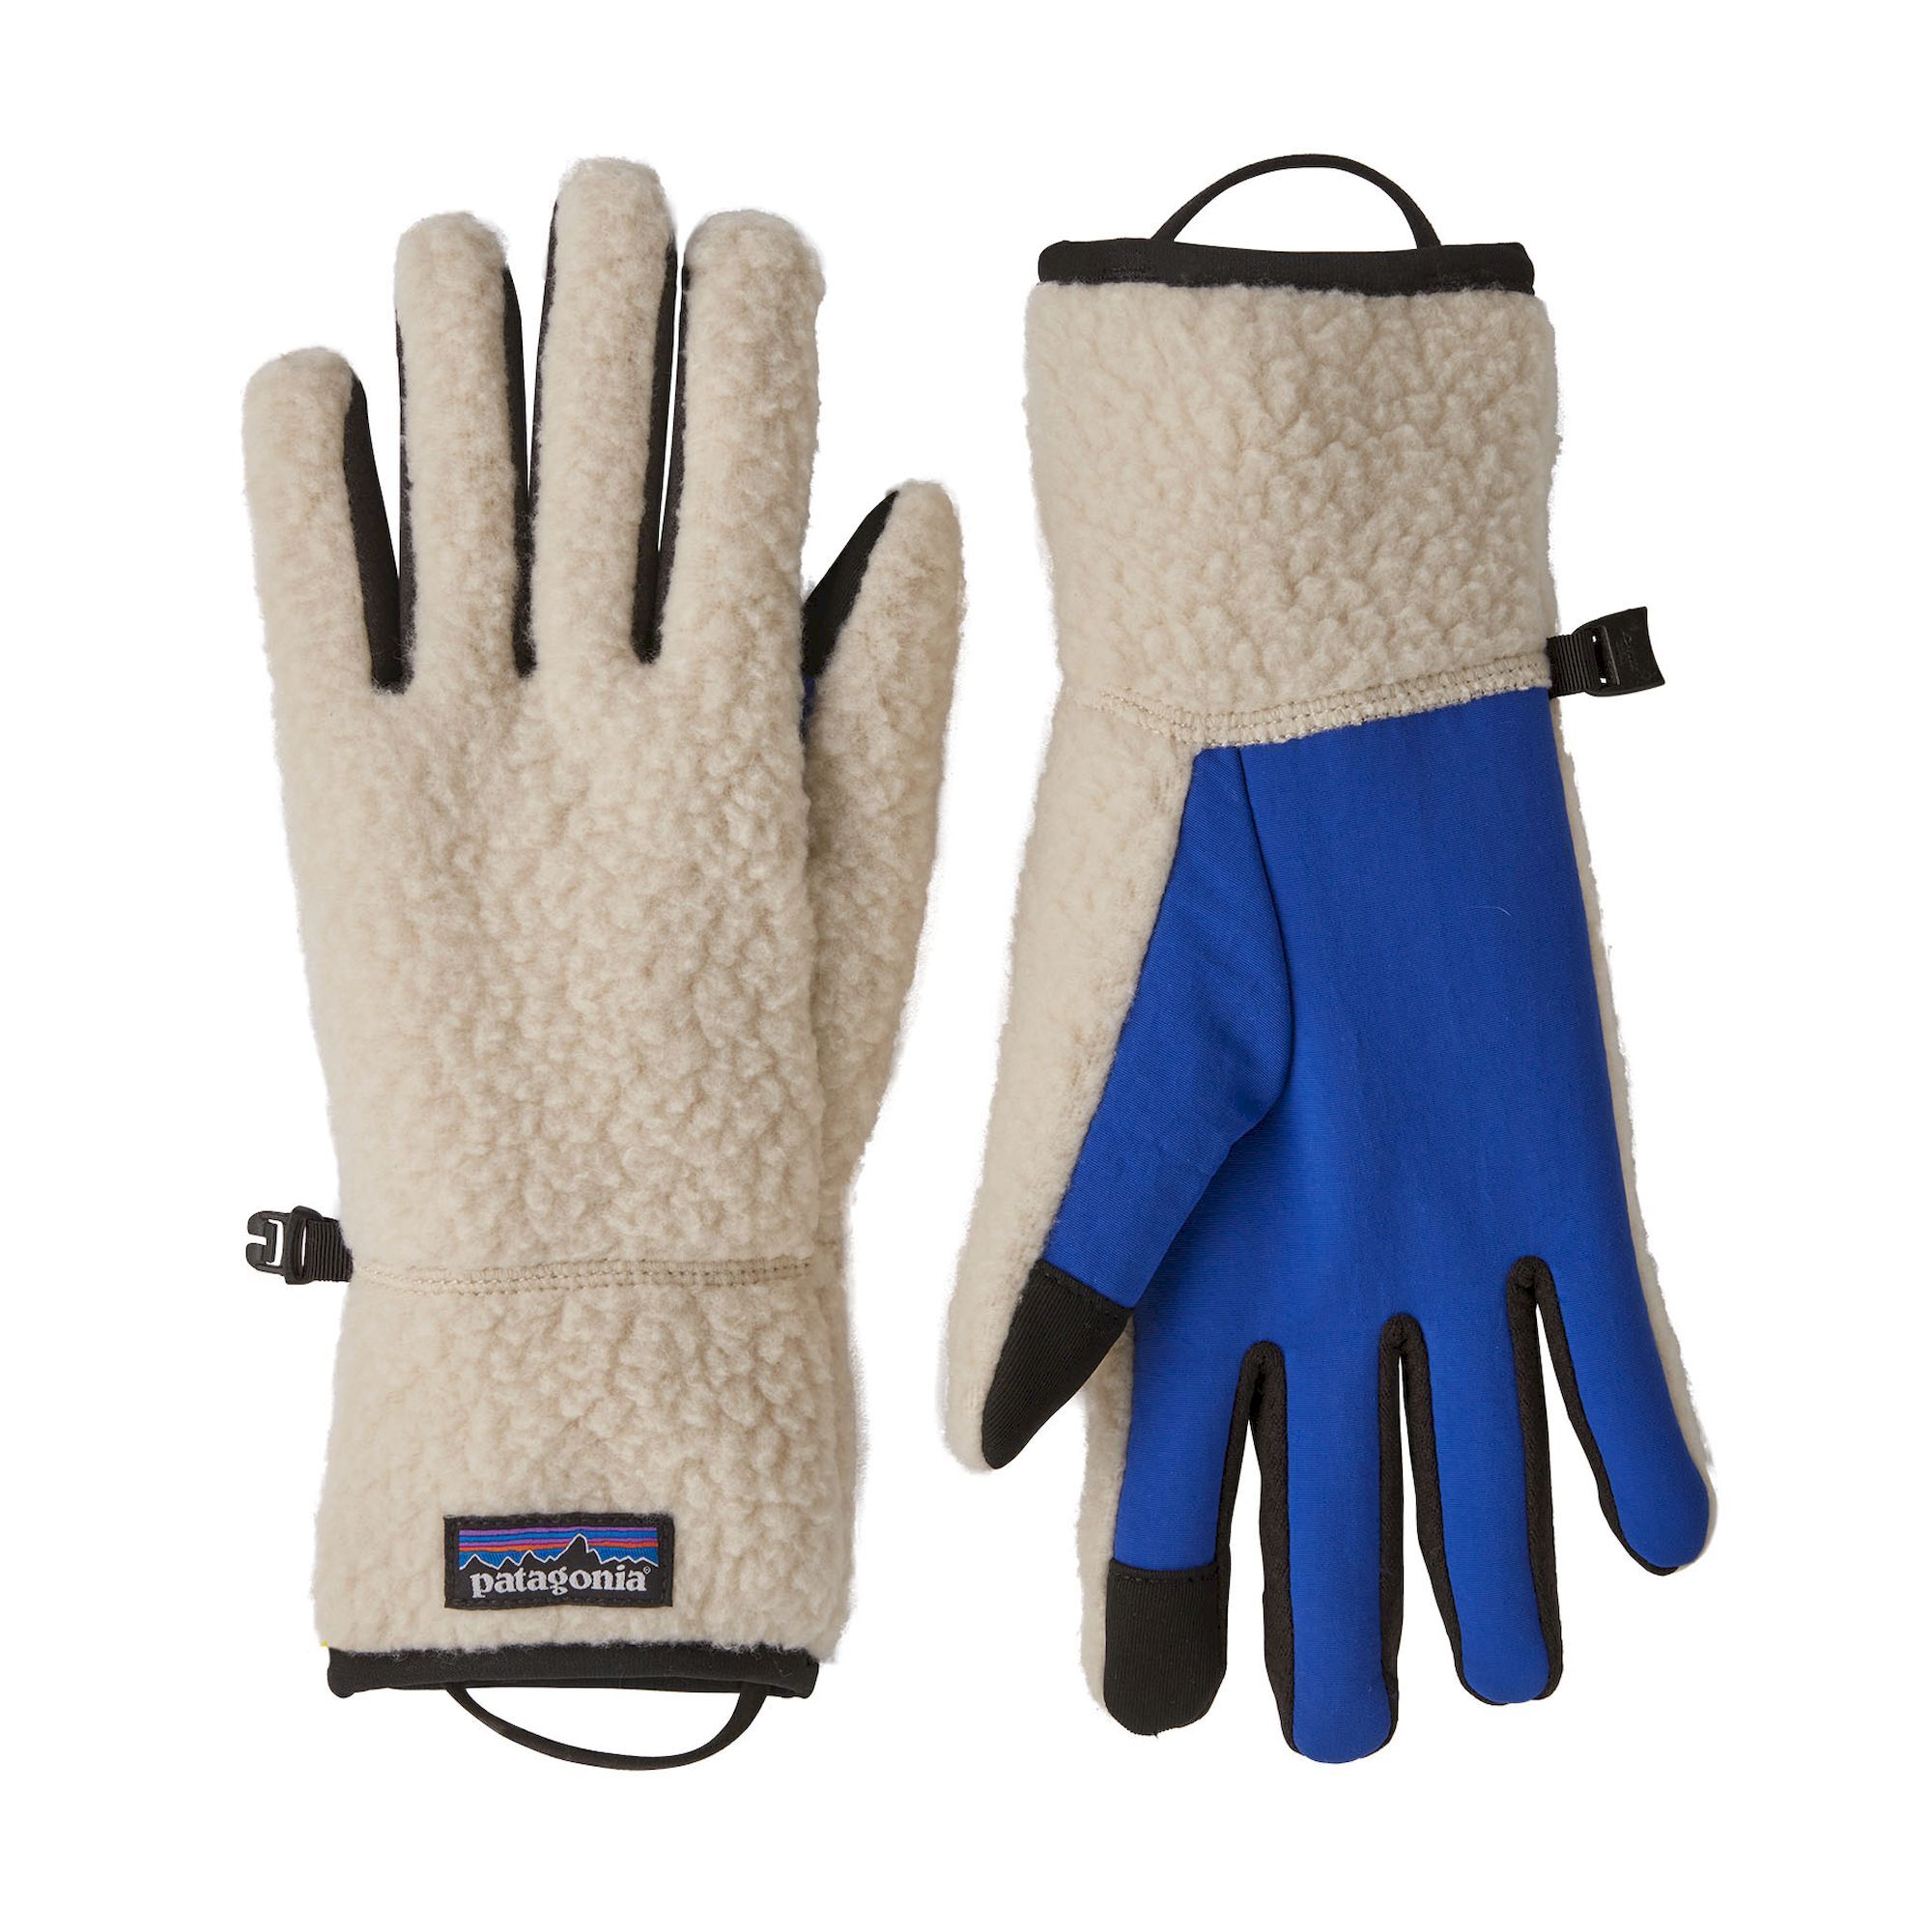 Patagonia Retro Pile Gloves - Gloves - Women's